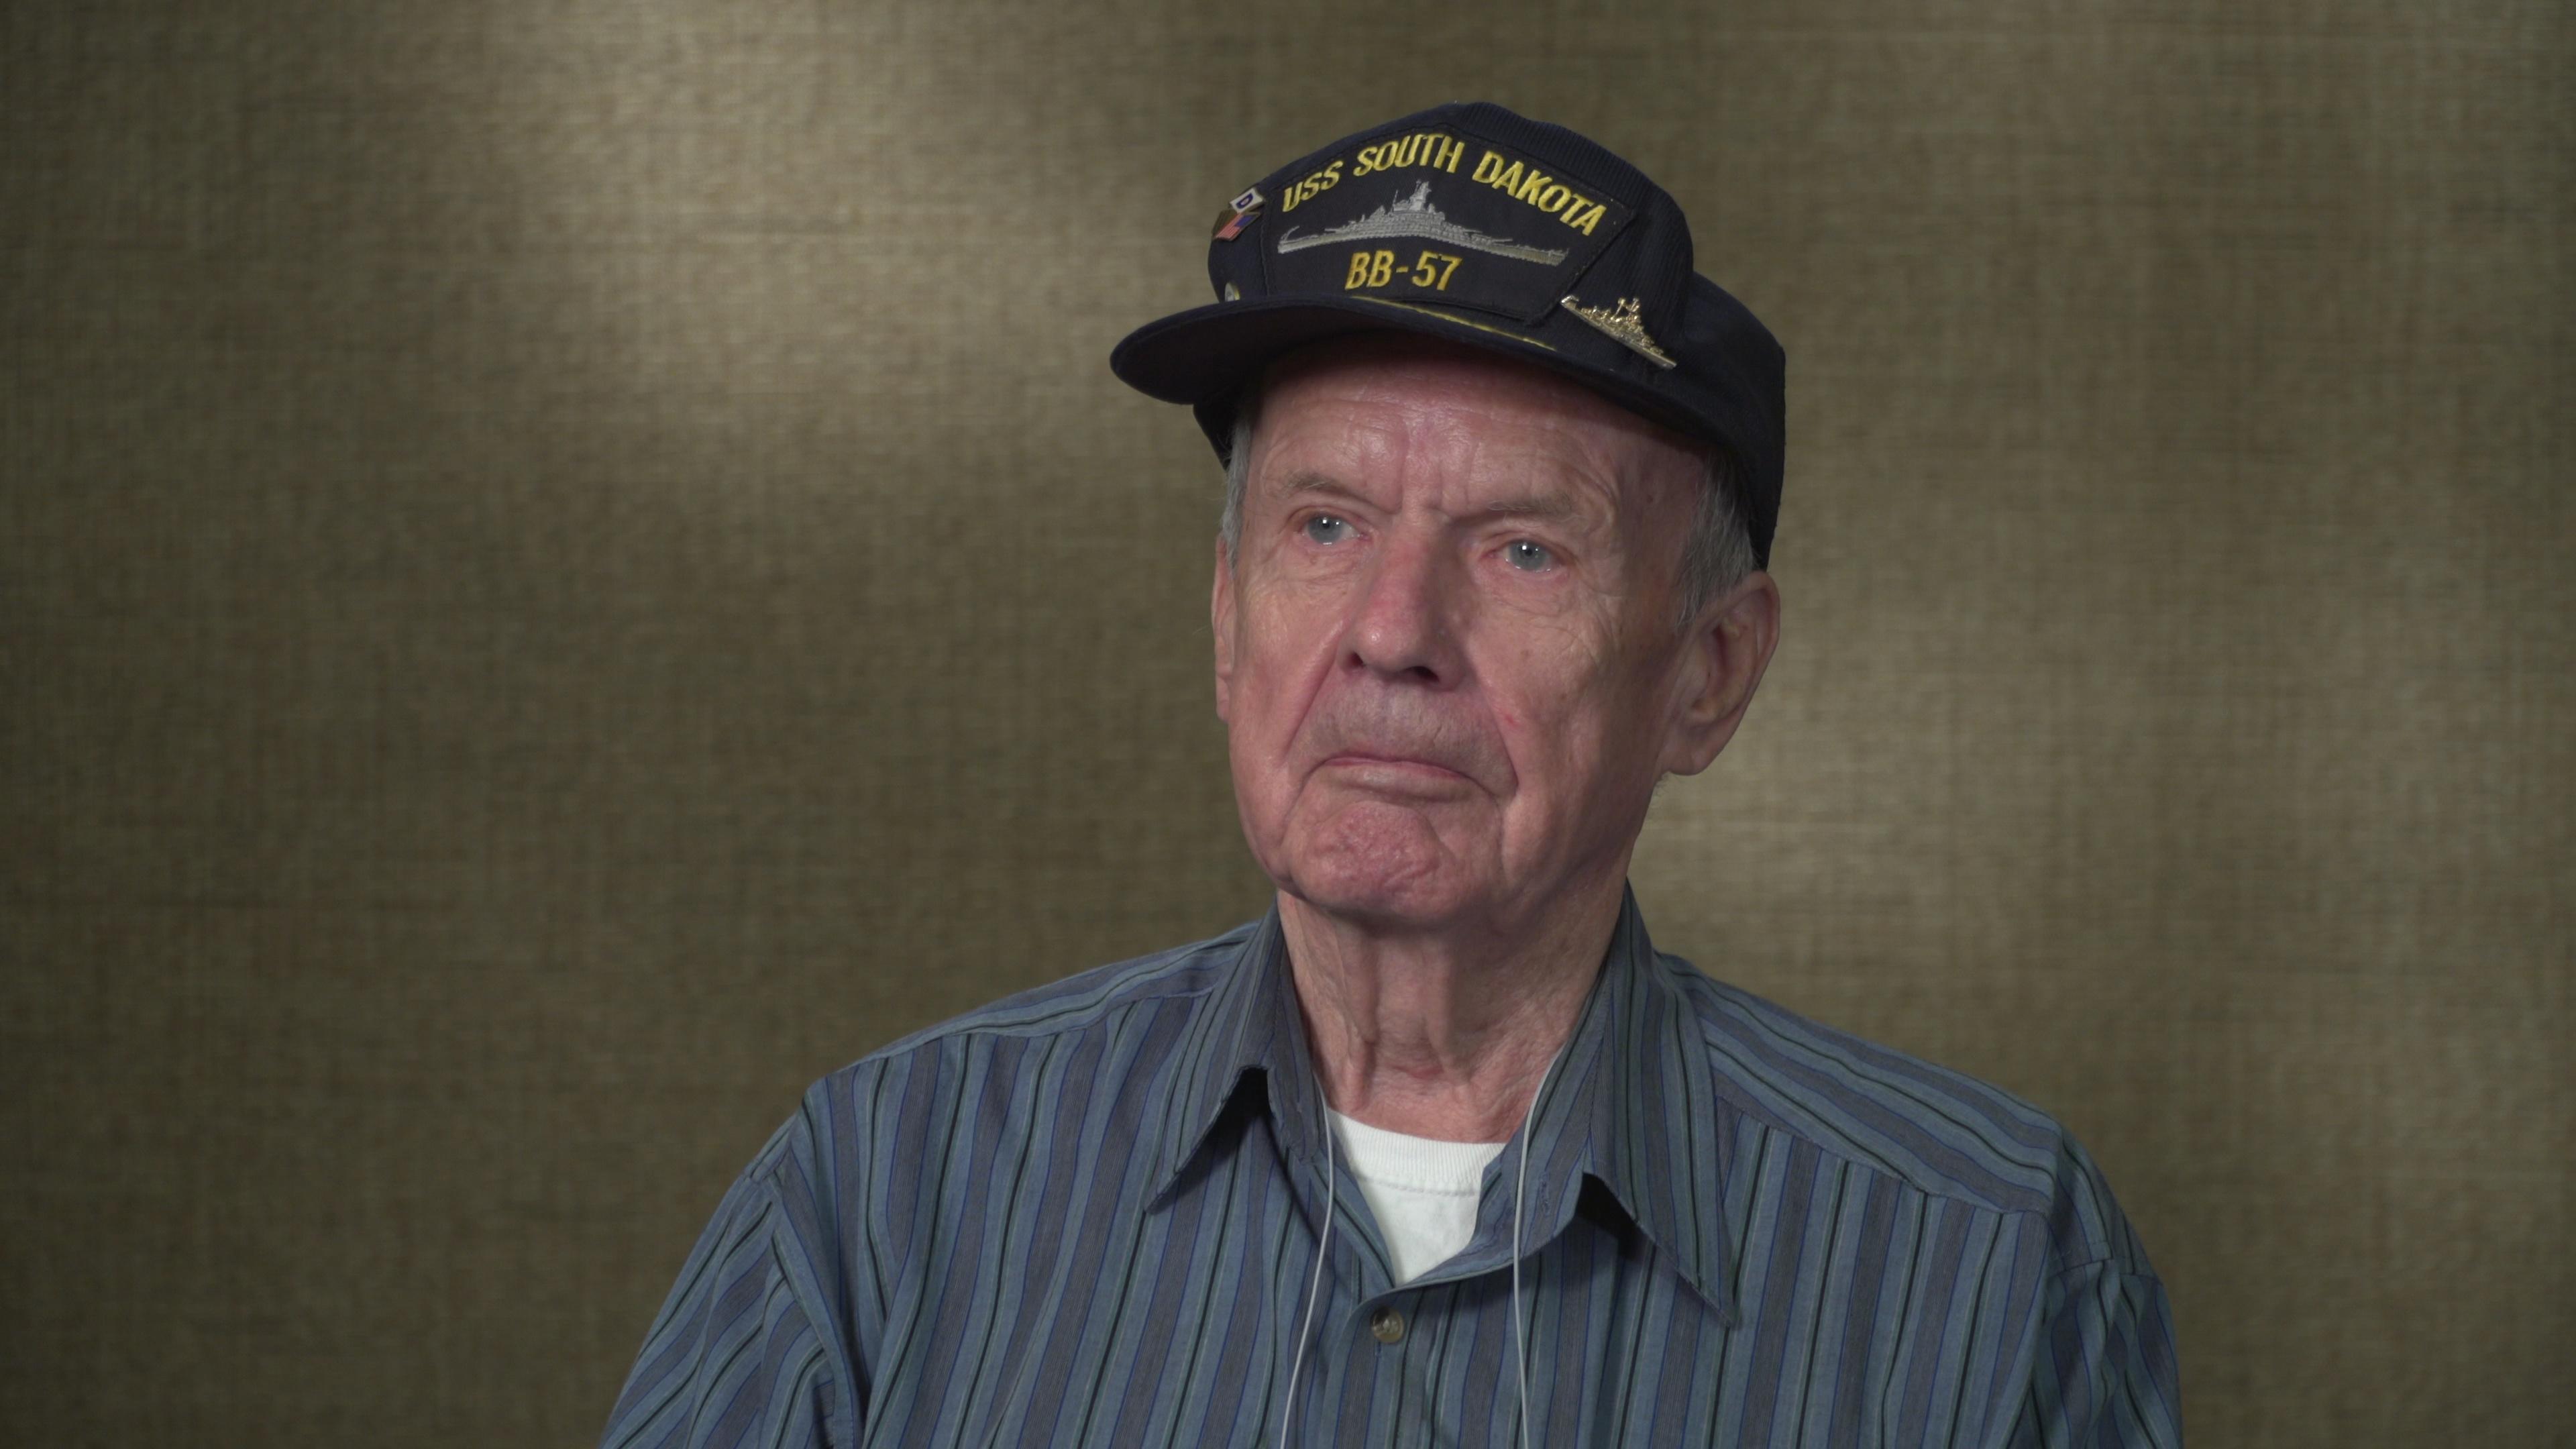 Veterans of the WWII Battleship South Dakota - Part 2